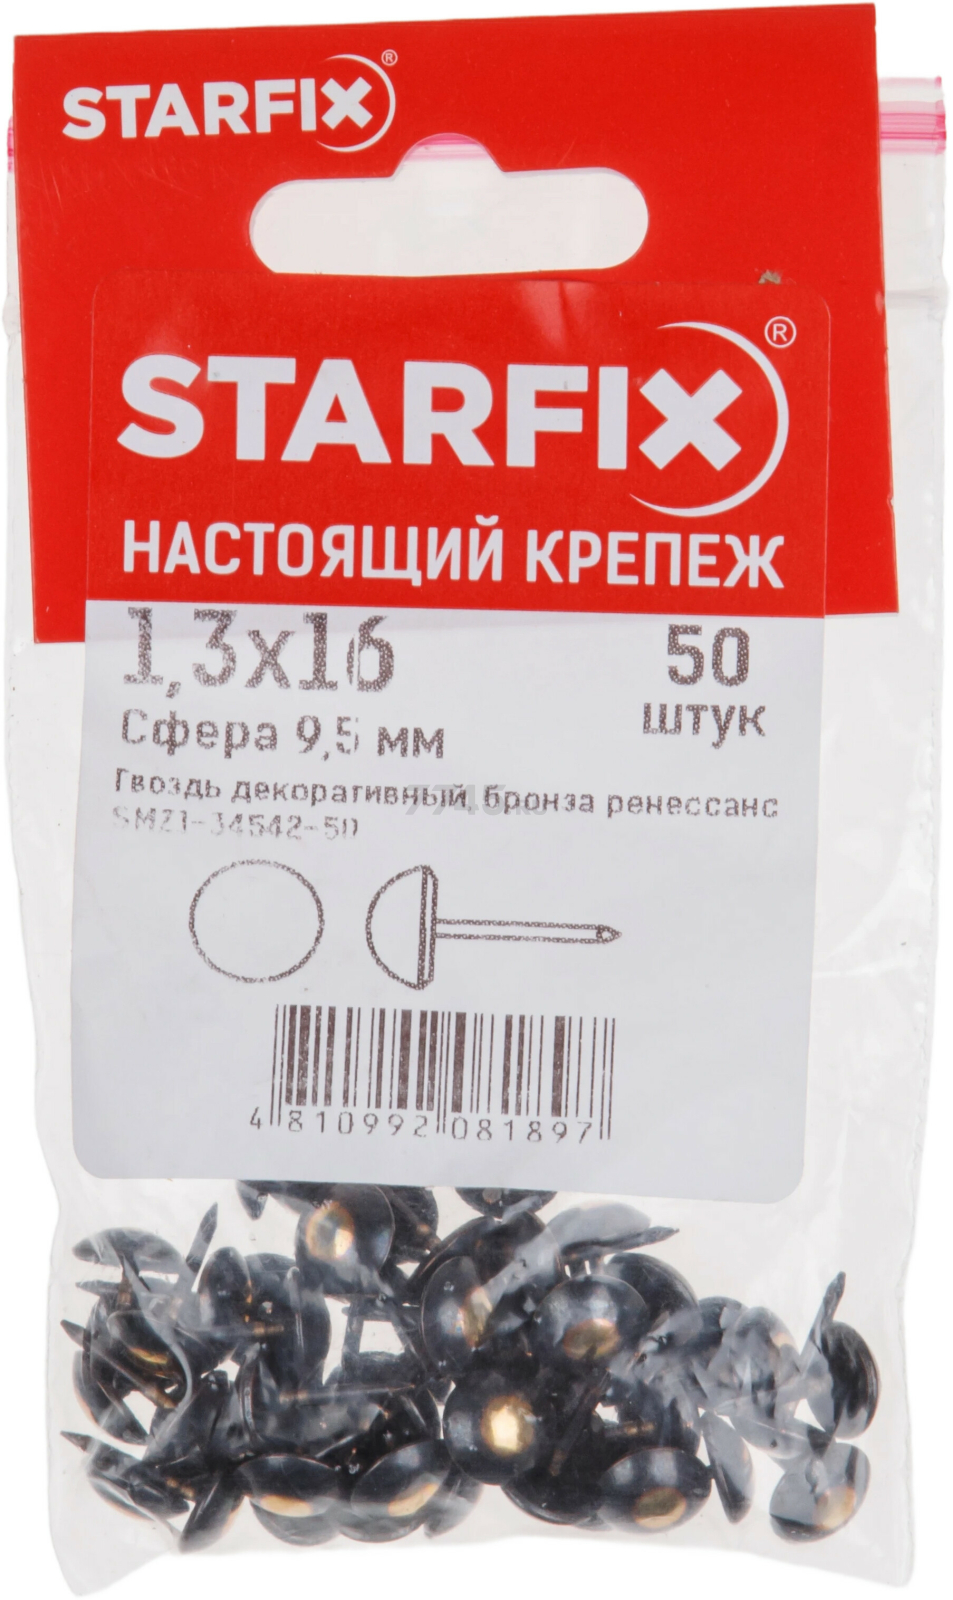 Гвозди декоративные 1,3х16 мм STARFIX Сфера 9,5 мм бронза ренессанс 50 штук (SMZ1-34542-50) - Фото 3